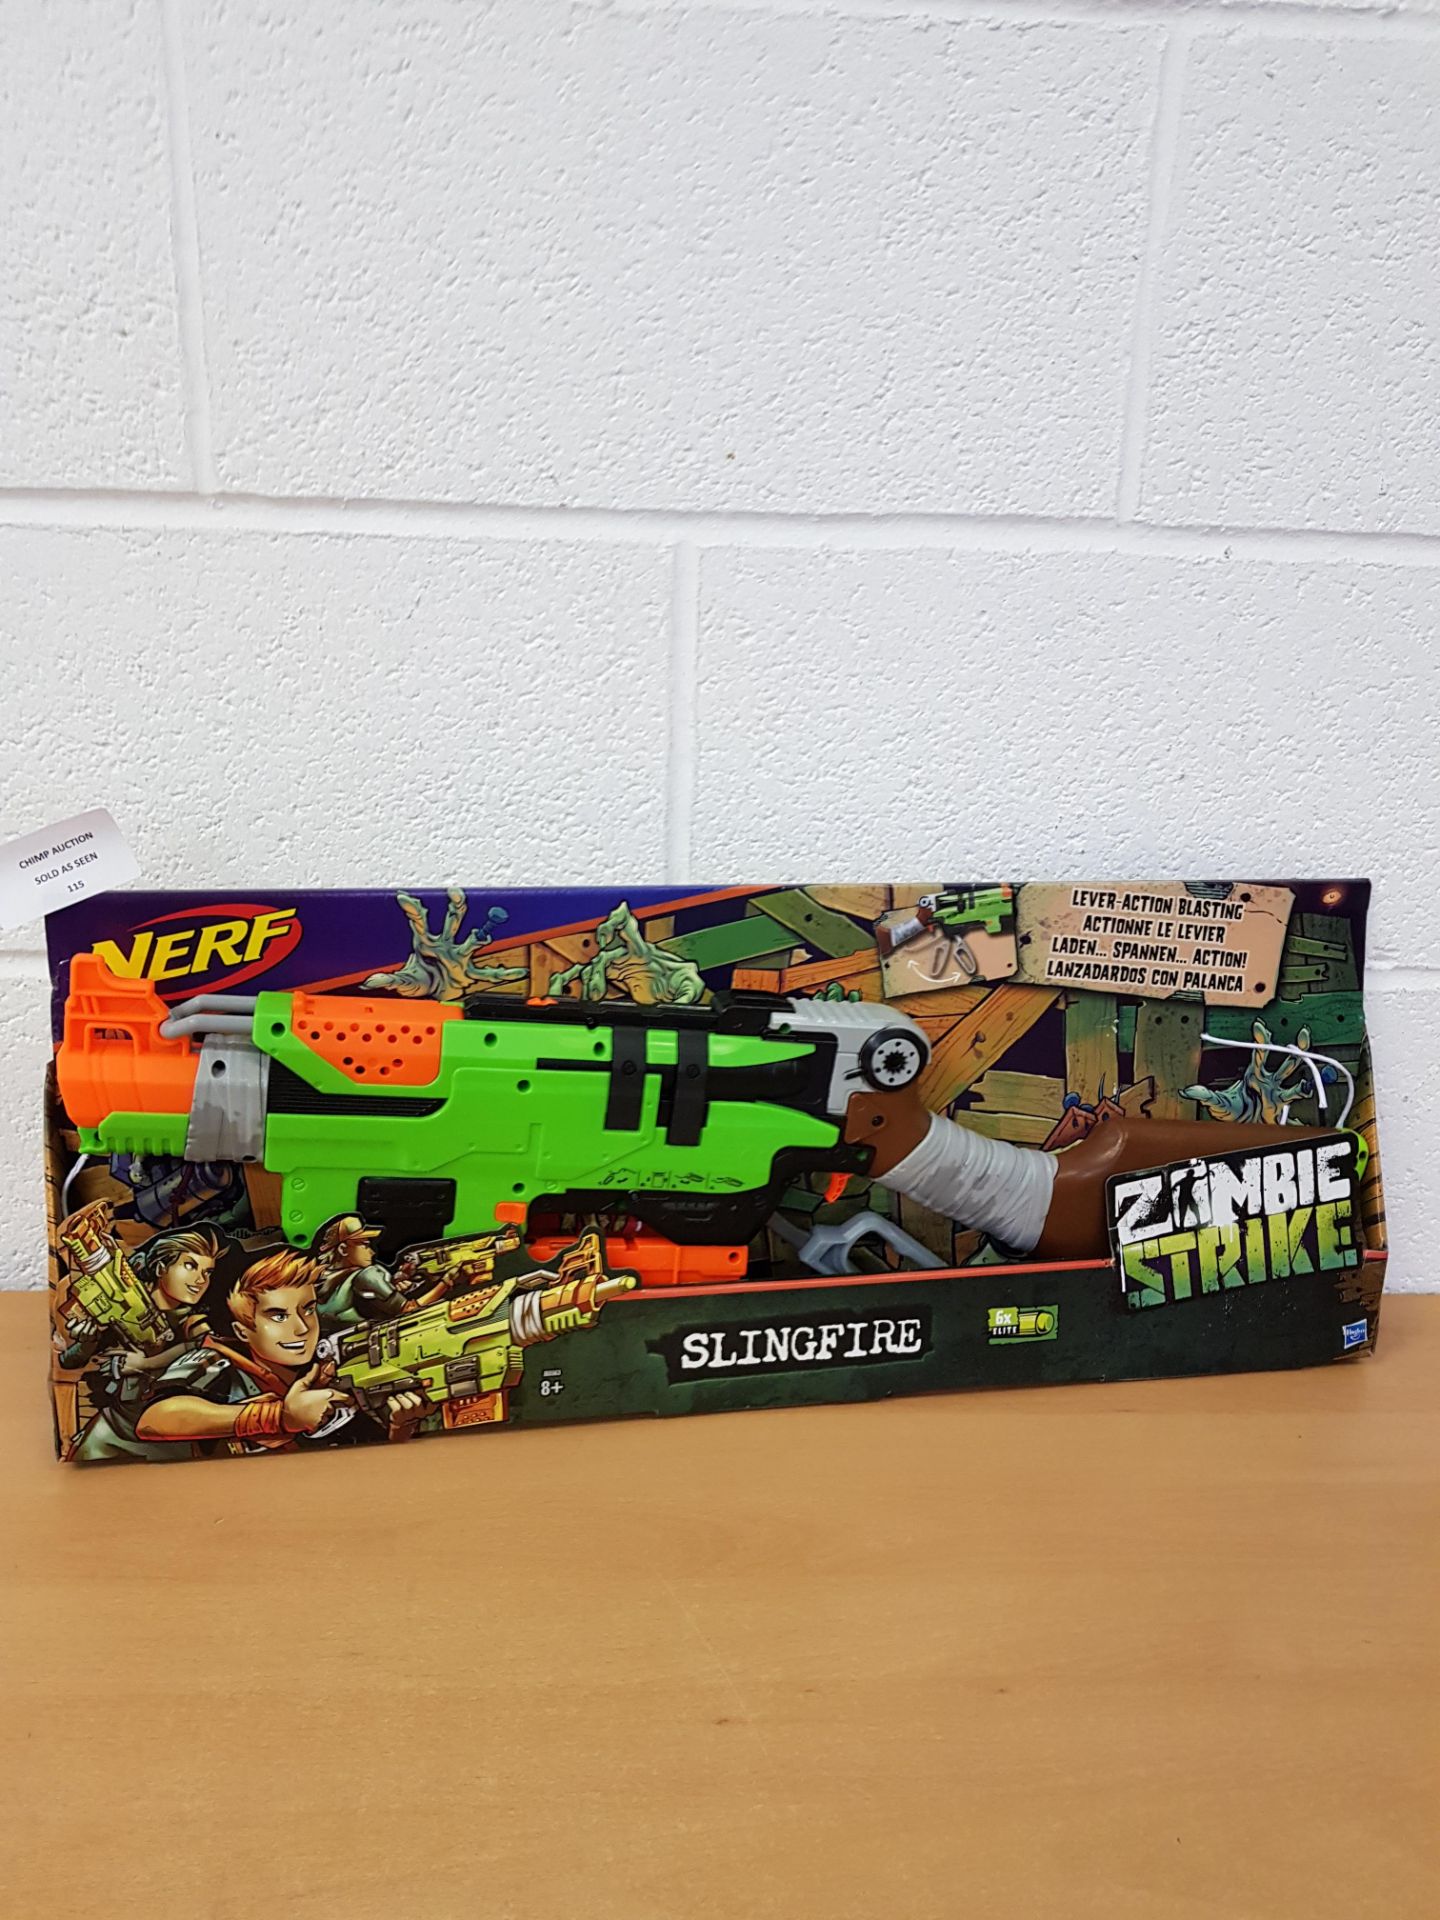 Nerf Zombie Strike Slingfire Shooter